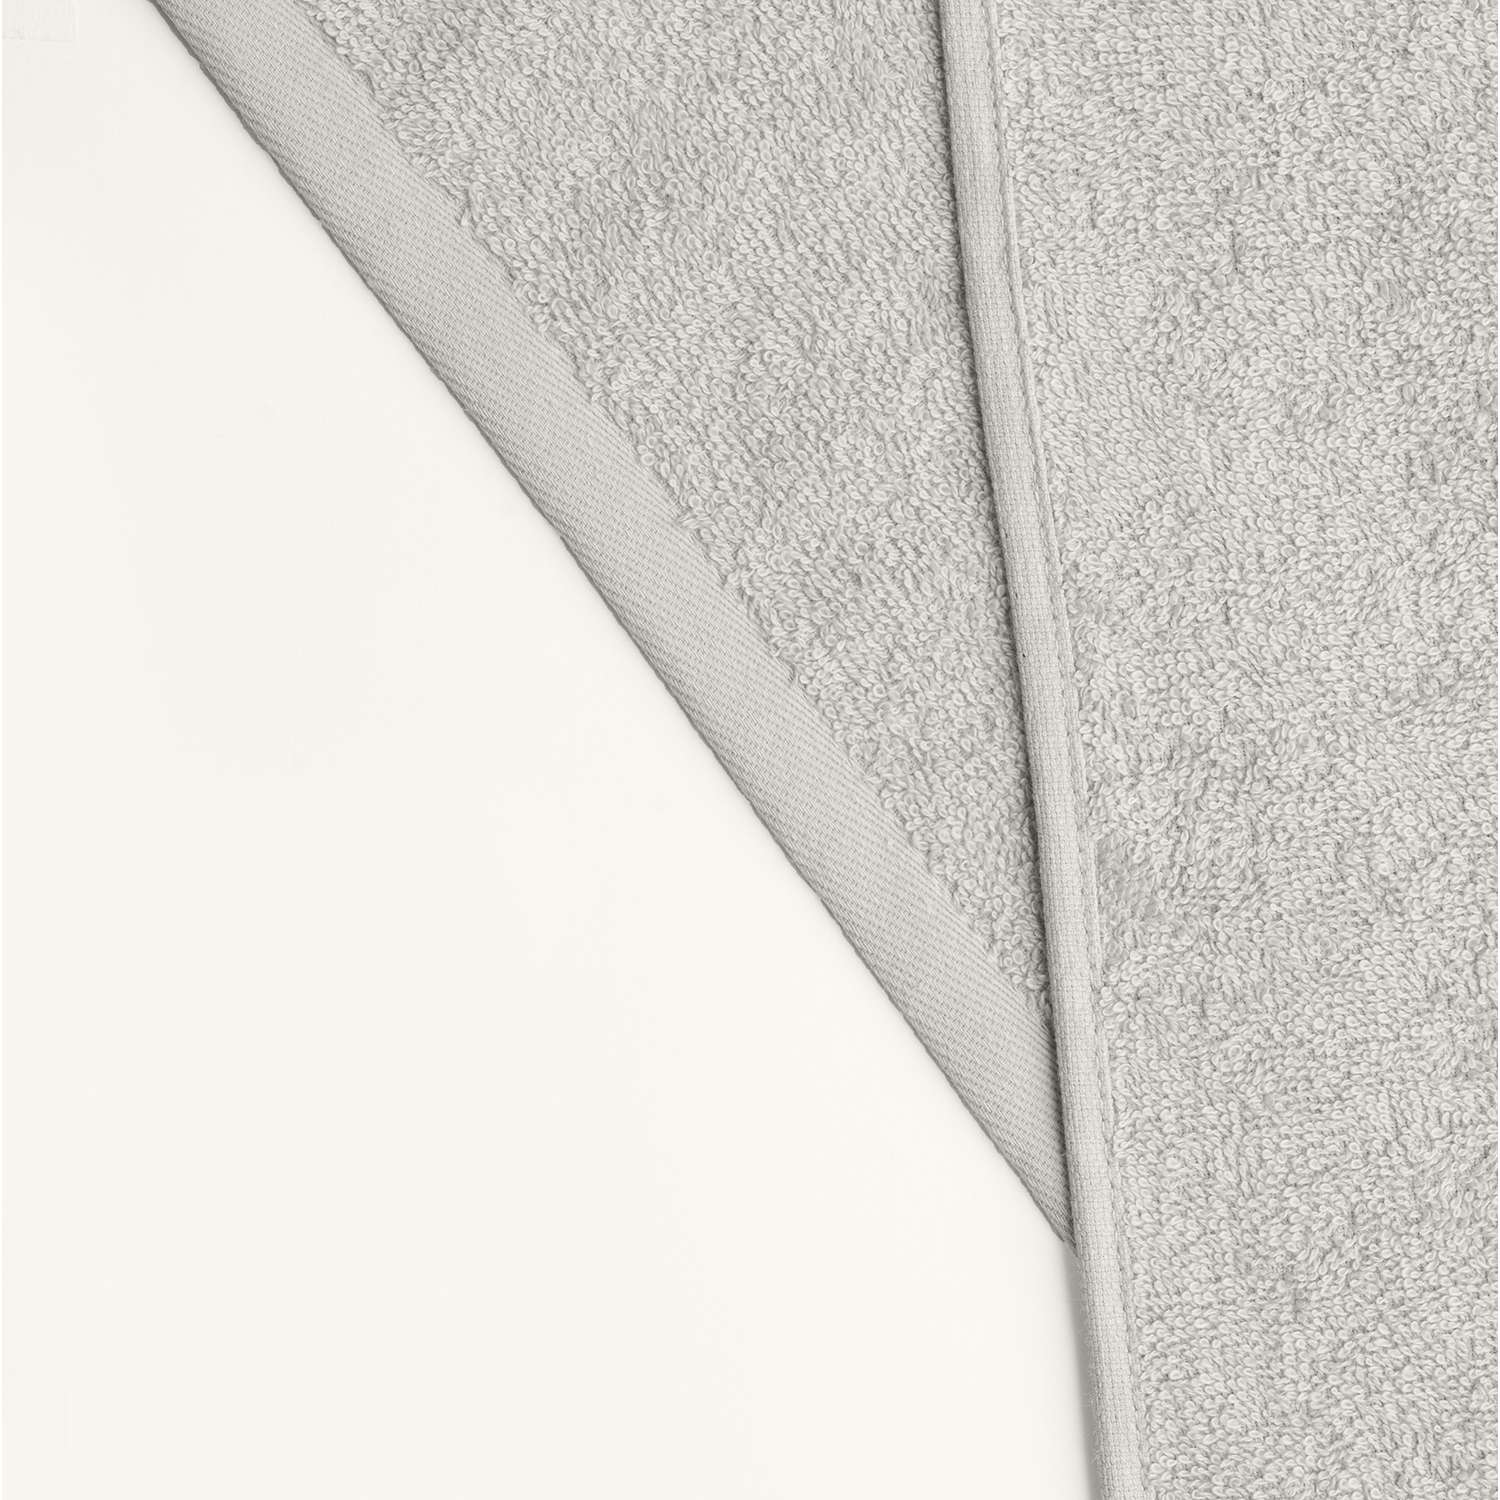 Набор махровых полотенец Unifico Nature светло-серый набор из 3 шт.:30х60-1и 50х80-1и70х130-1 - фото 9